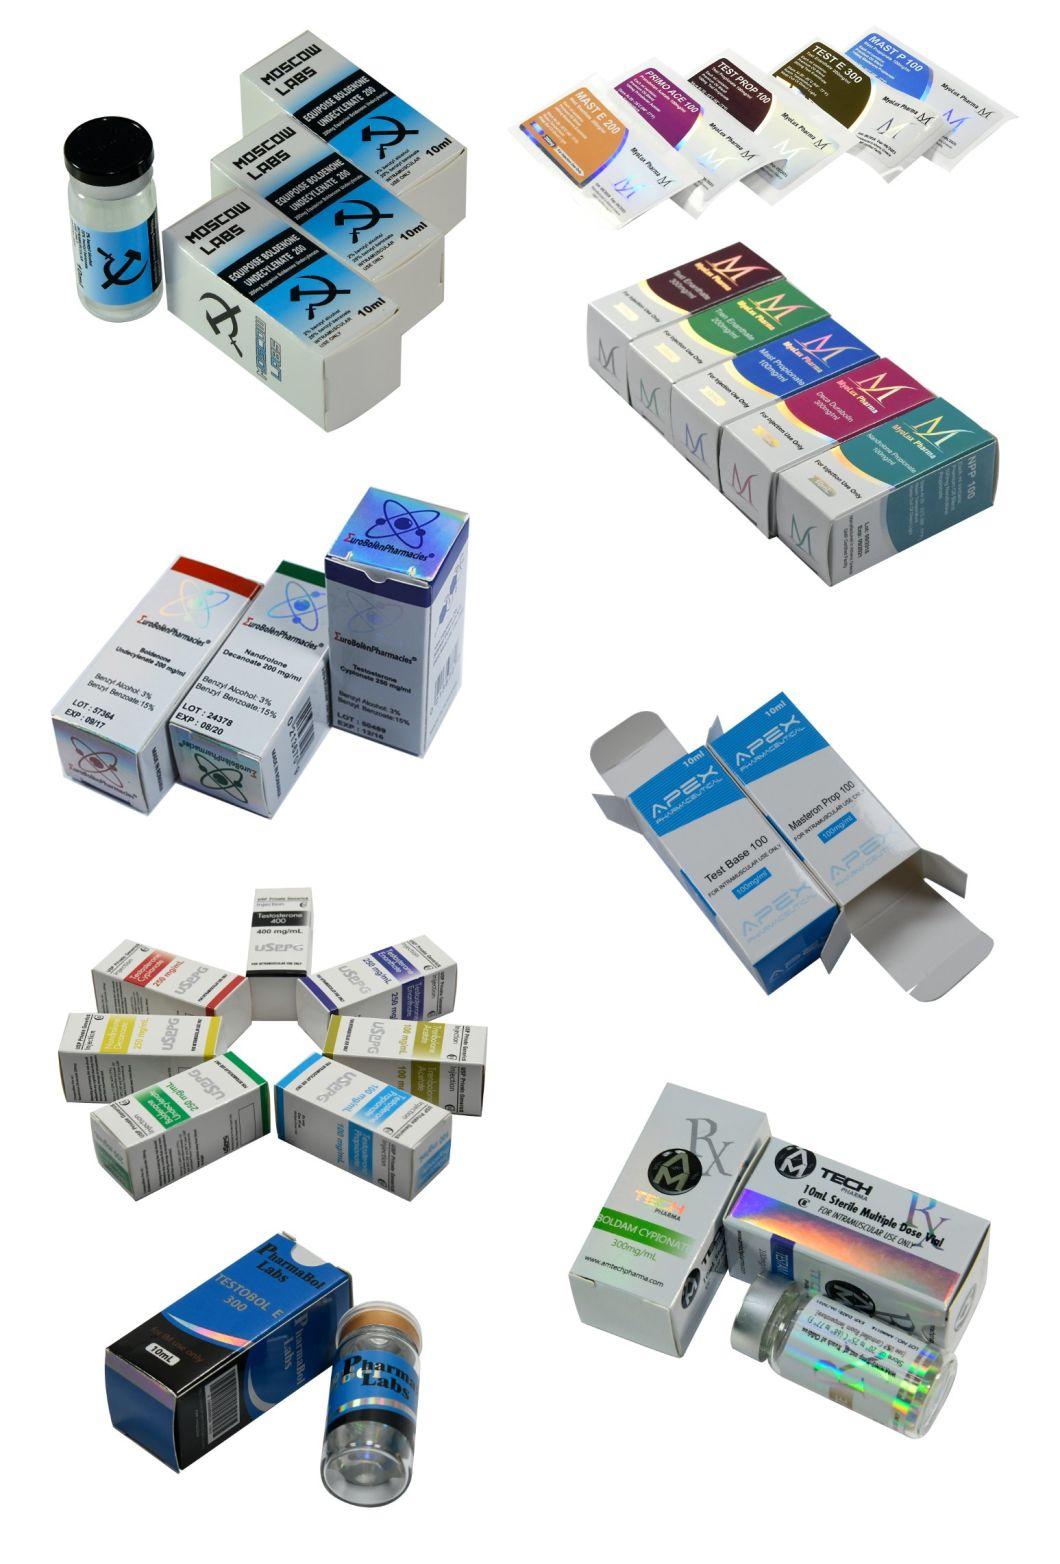 Free Sample Printing Paper 10 Ml Vial Medicine Bottle Pill Packaging Box